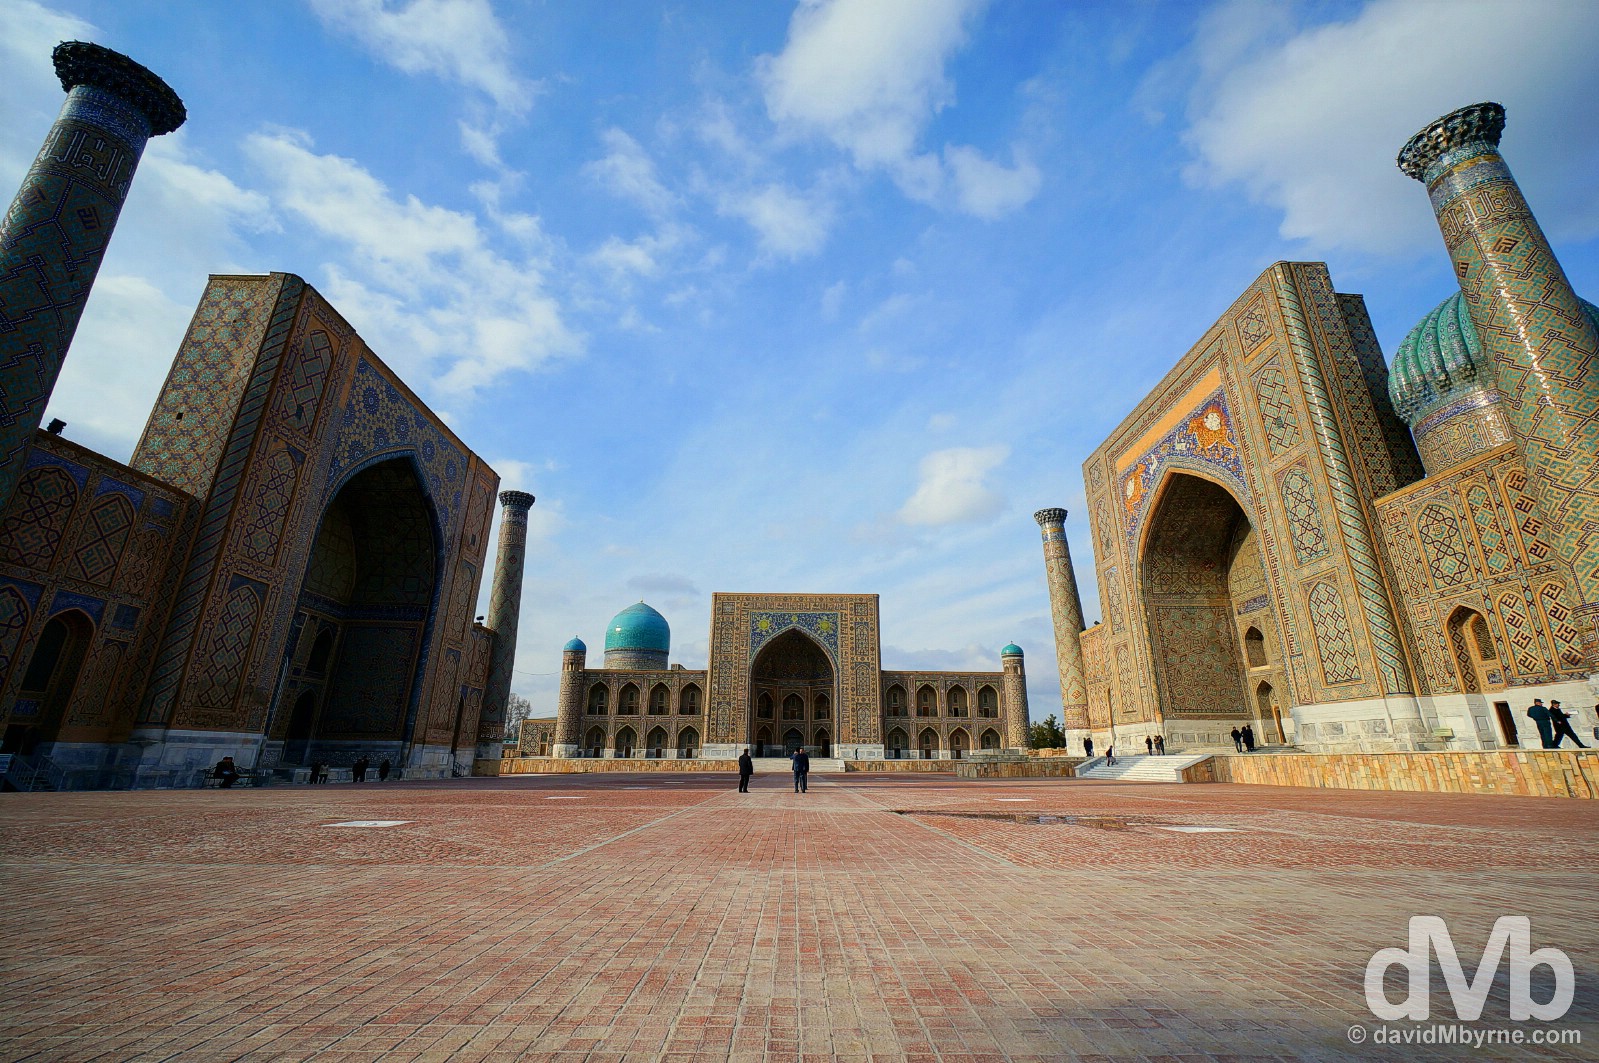 The Registan in Samarkand, Uzbekistan. March 8, 2015.